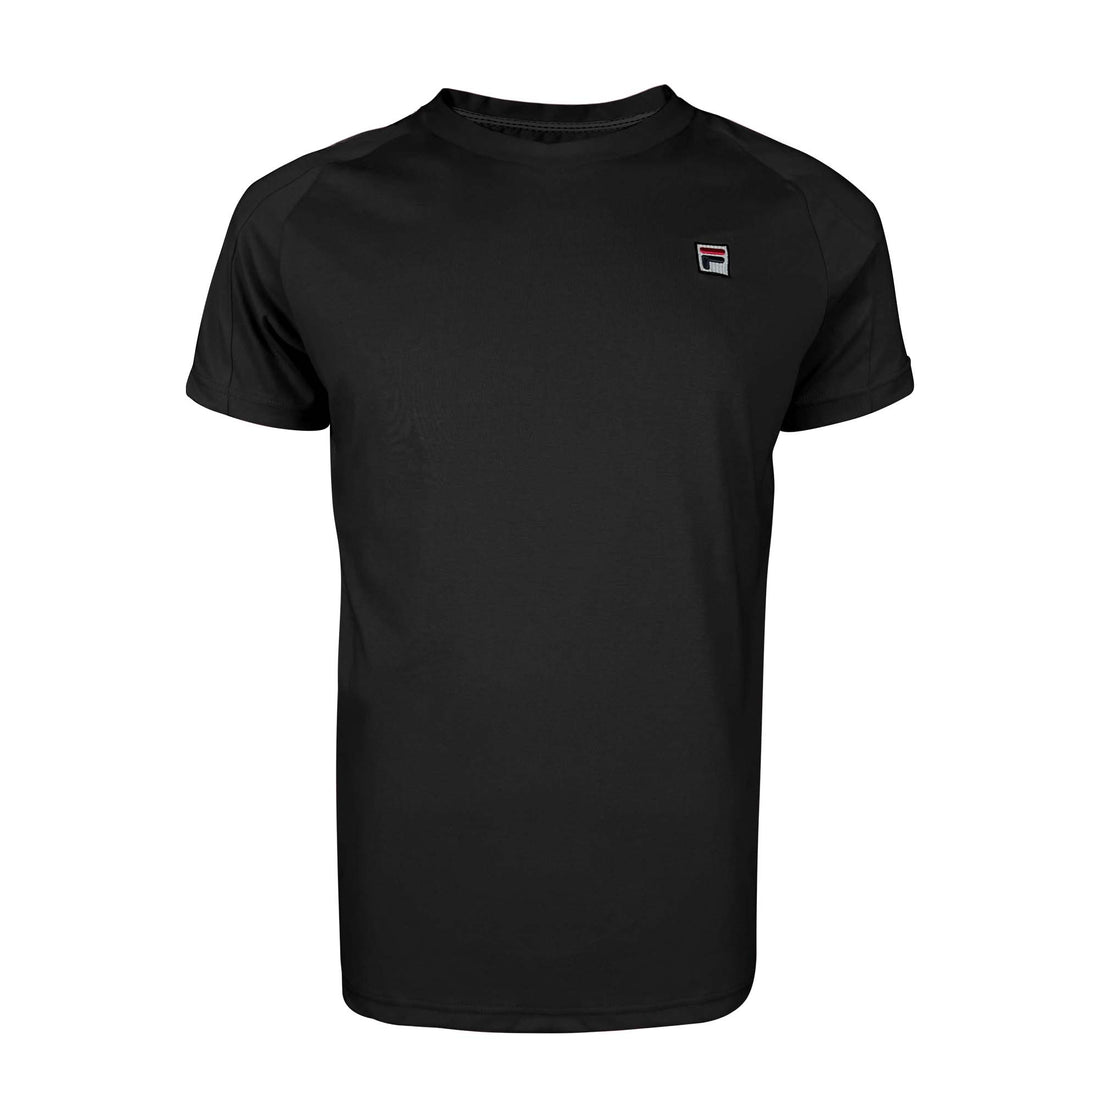 Excel Cotton Tee | Round Neck Shirts | MZactivewear